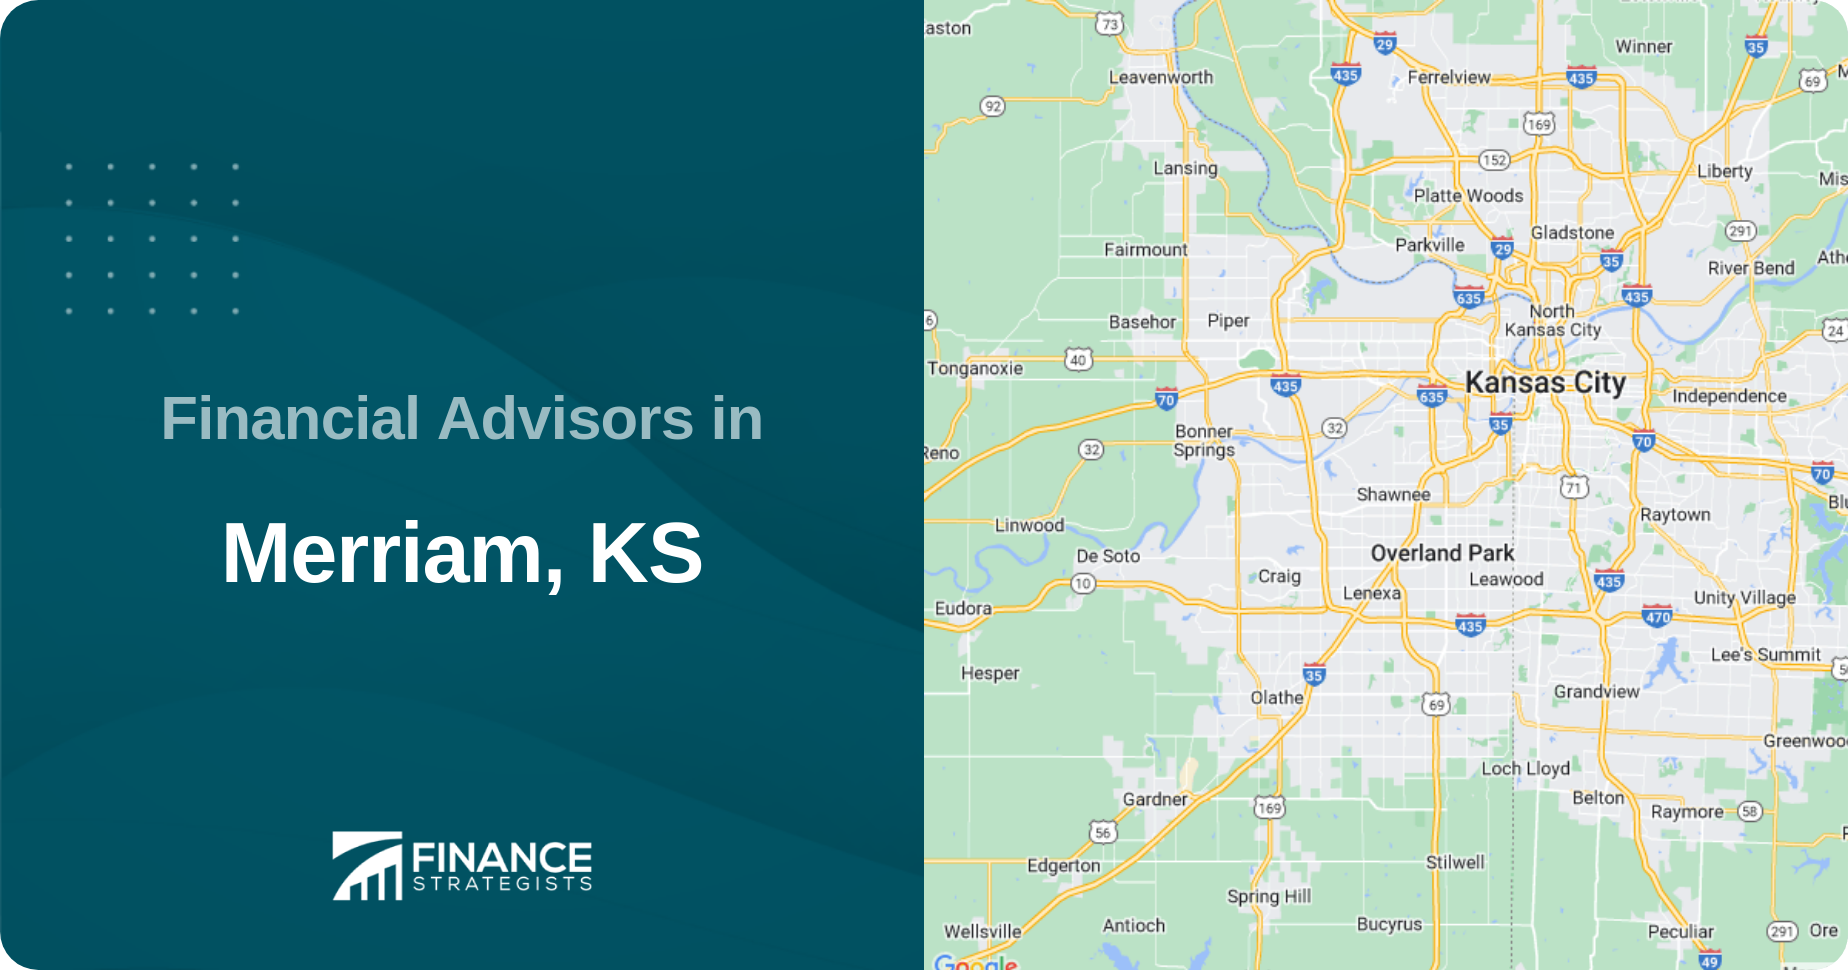 Financial Advisors in Merriam, KS